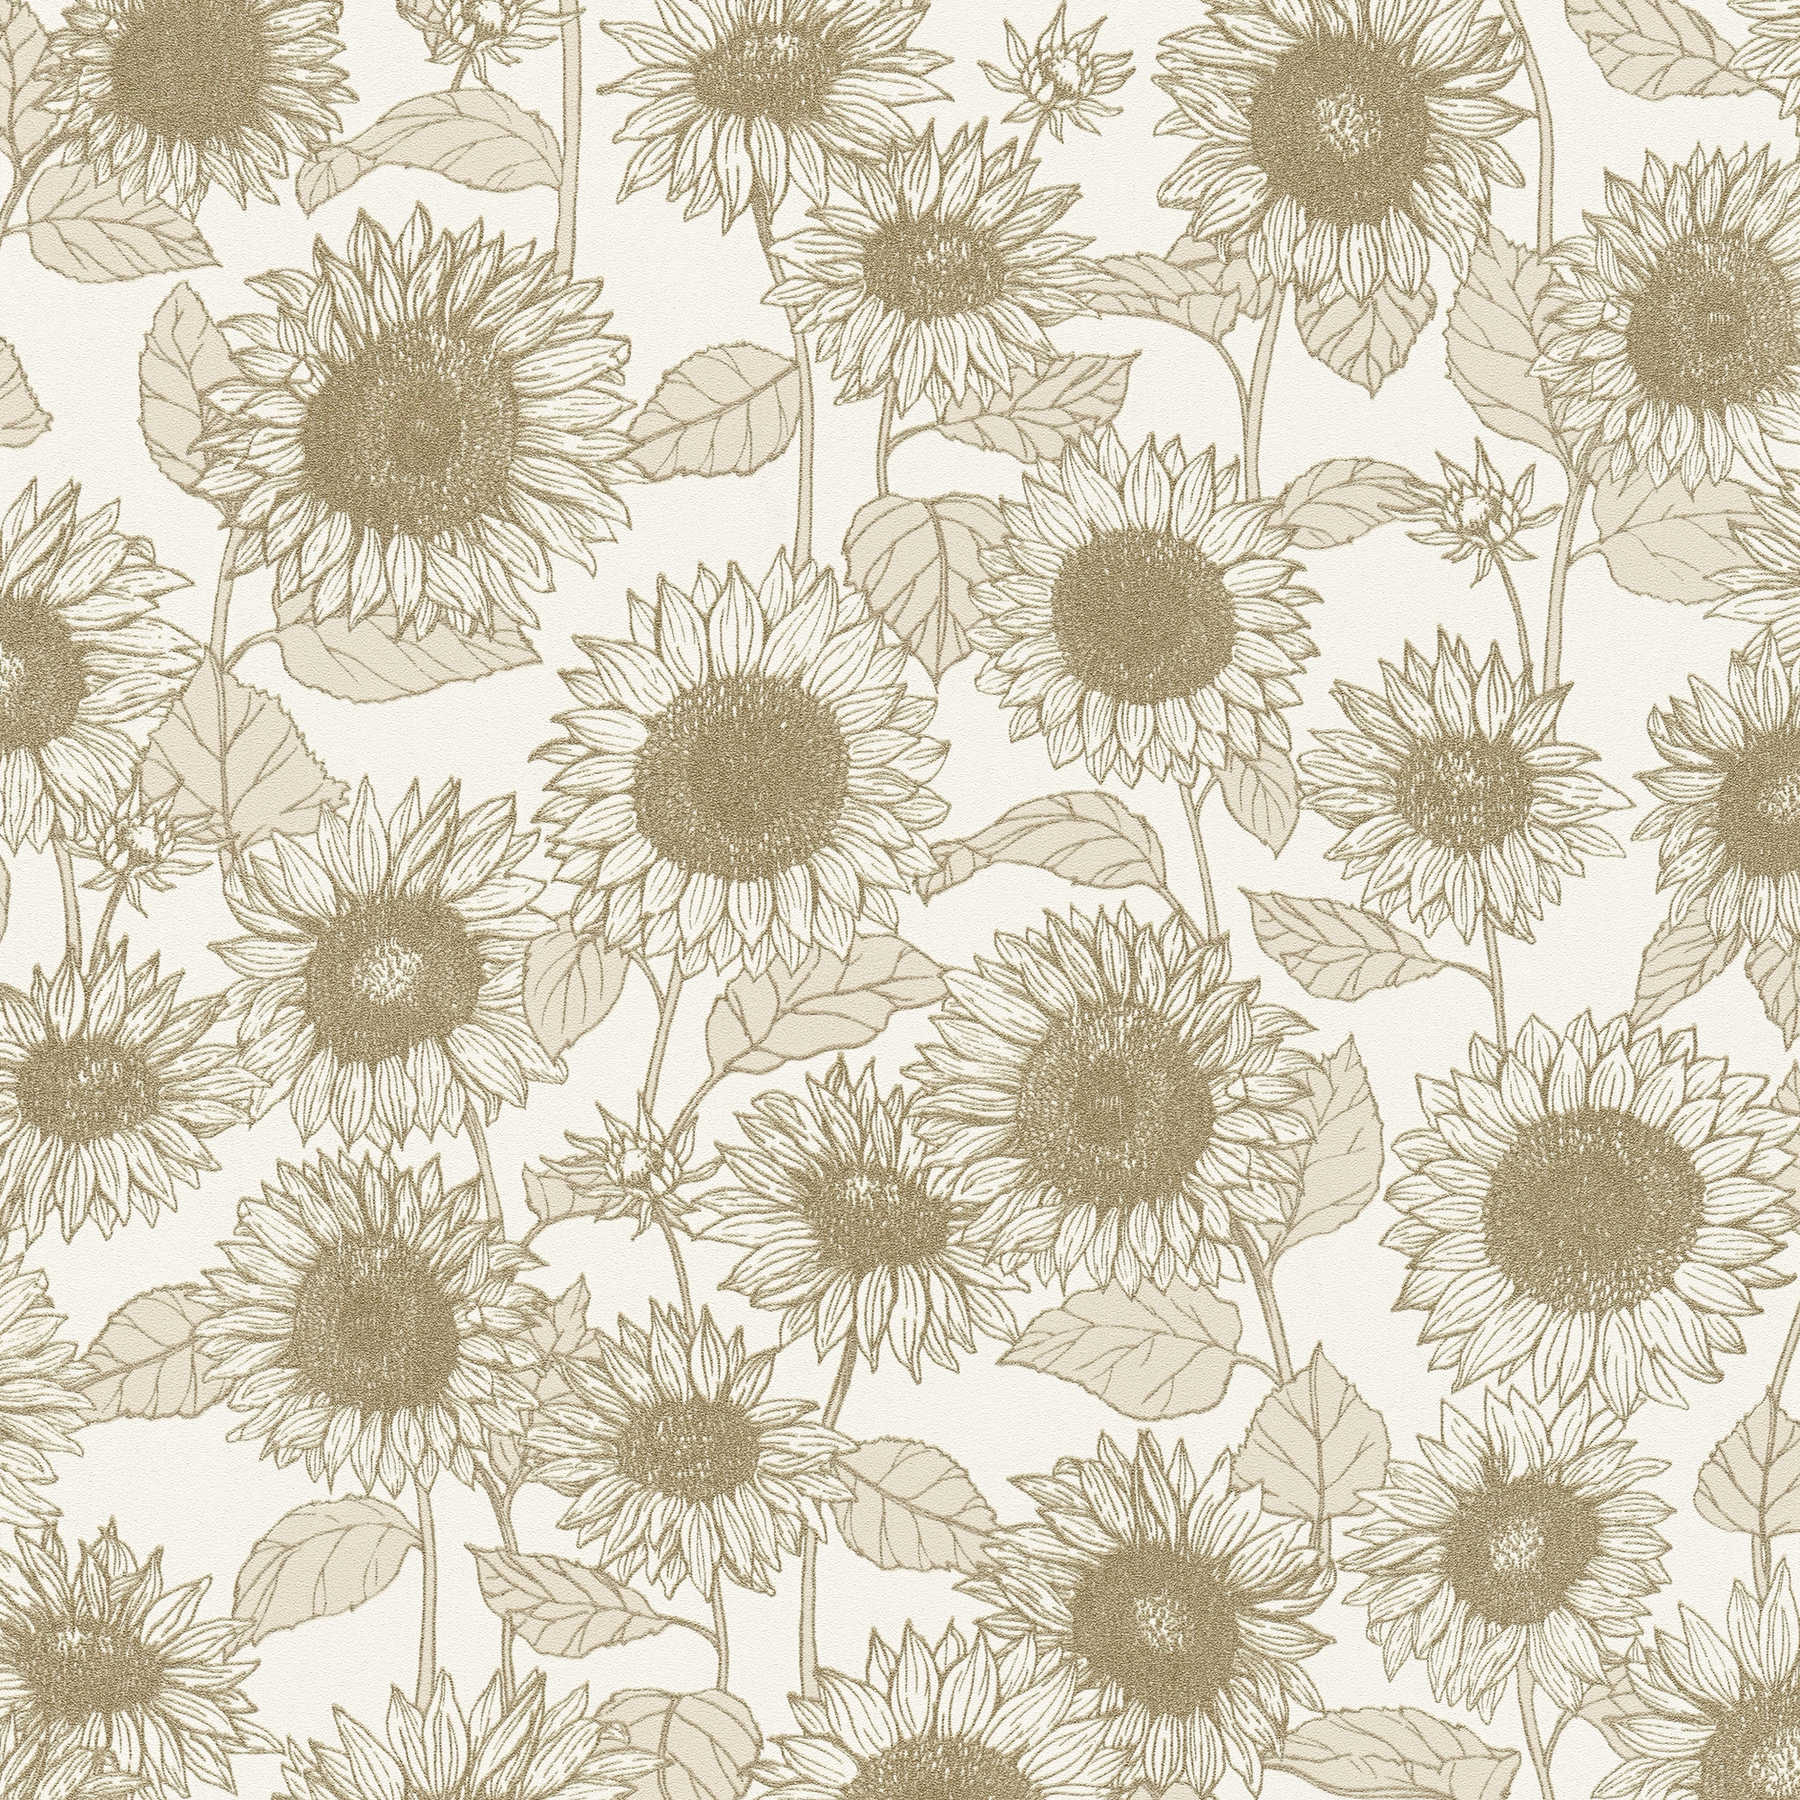 Wallpaper sunflowers with metallic effect - beige, white
